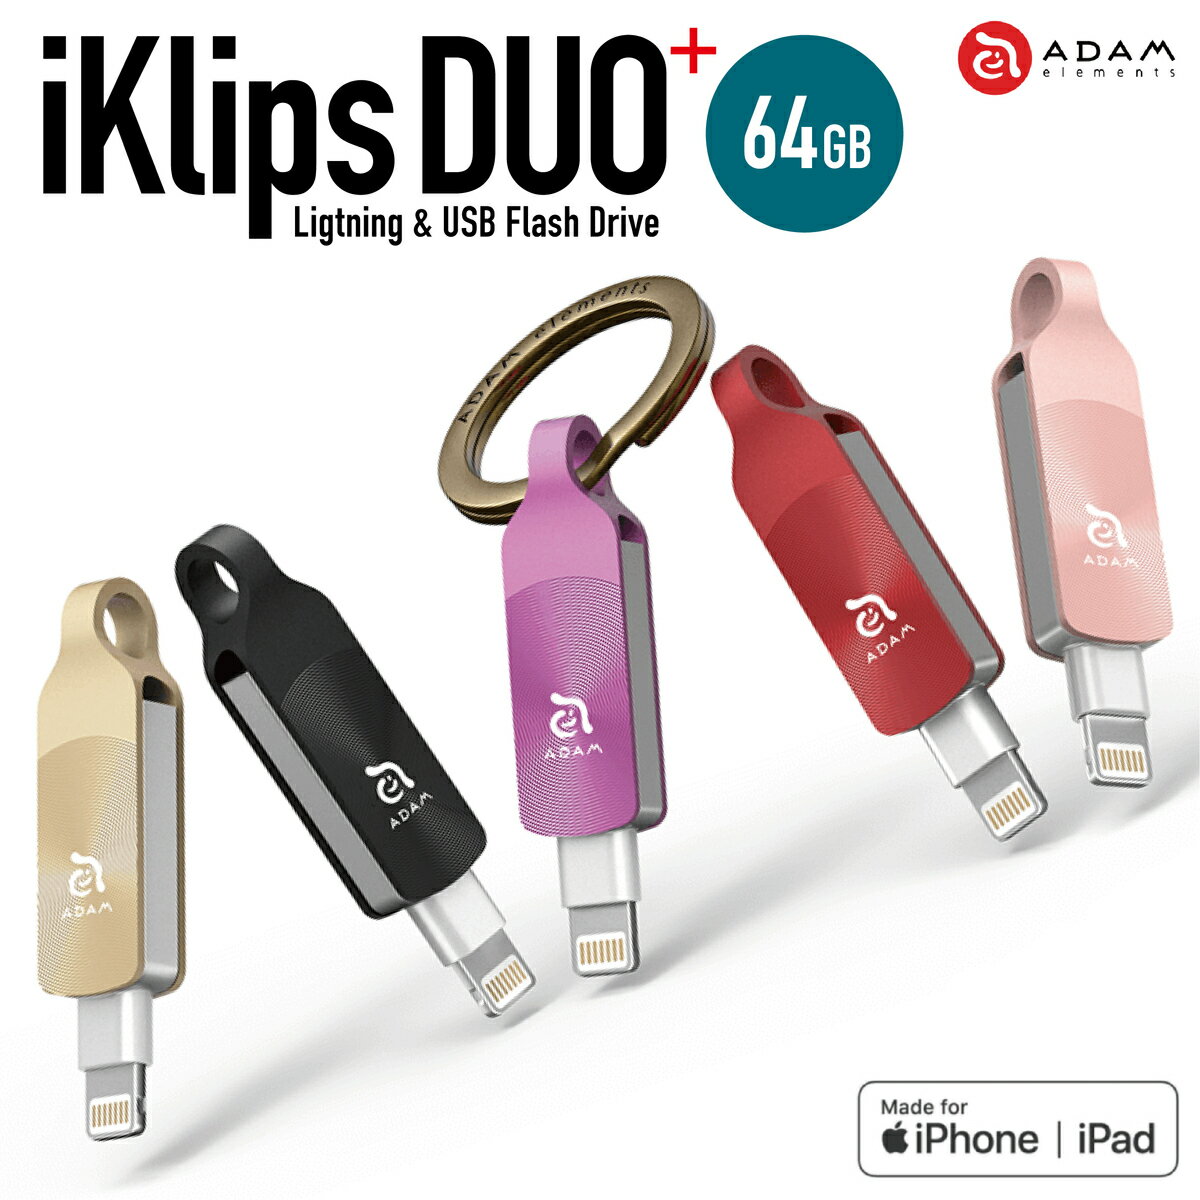 ADAM elements iKlips DUO+ 64GB Lightning USBメモリ USB3.1 iPhone iPad MFi認証 ライトニング 簡単 バックアップ 拡張 アイクリプス デュオ アダムエレメンツ (3C)iKlipsDUO+64GB